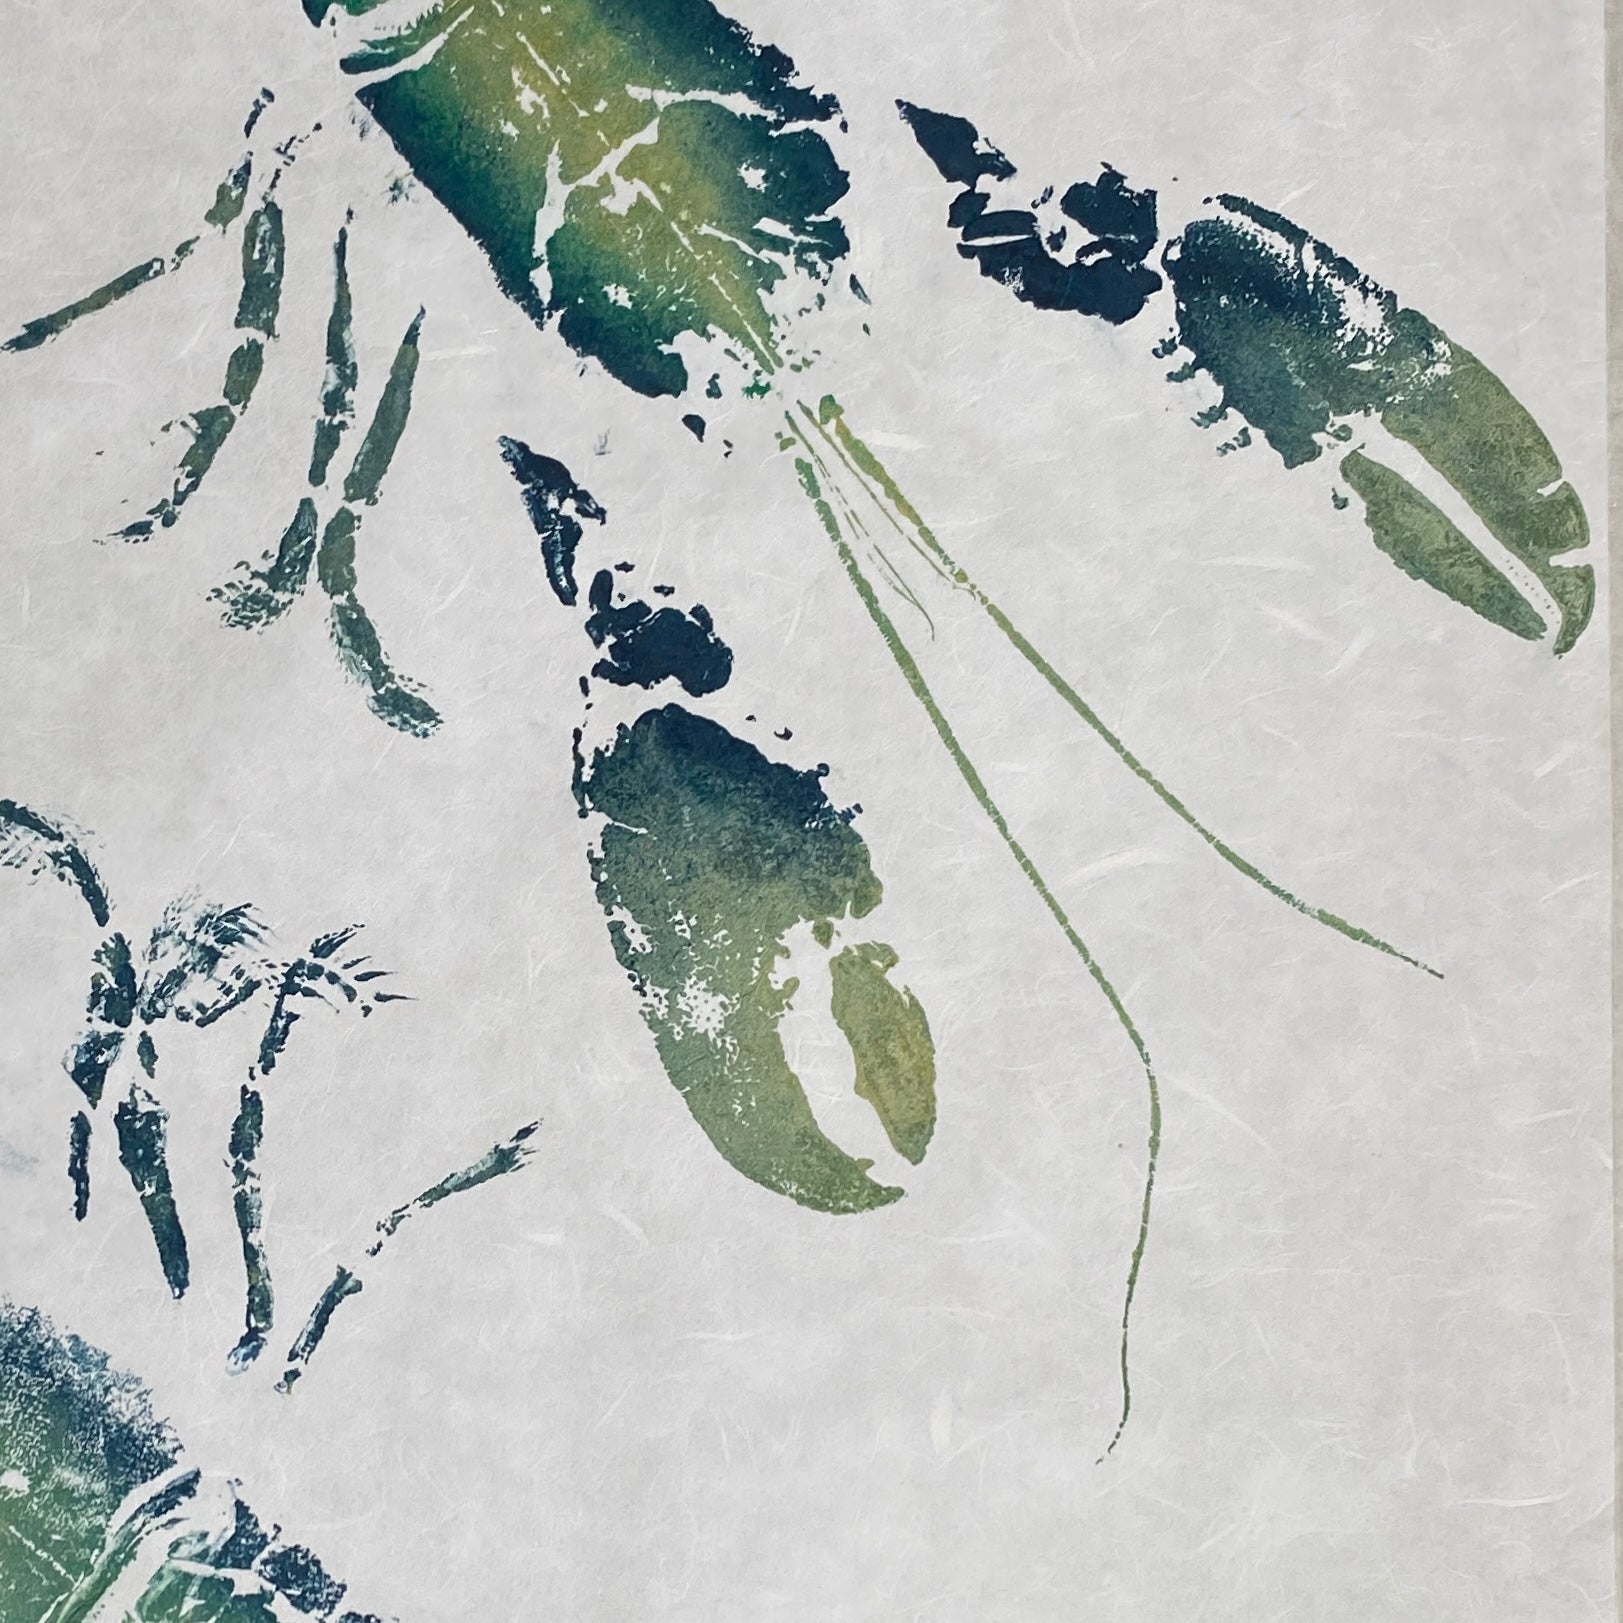 Menai Strait Lobsters, Gyotaku Printed and Wet Mounted.